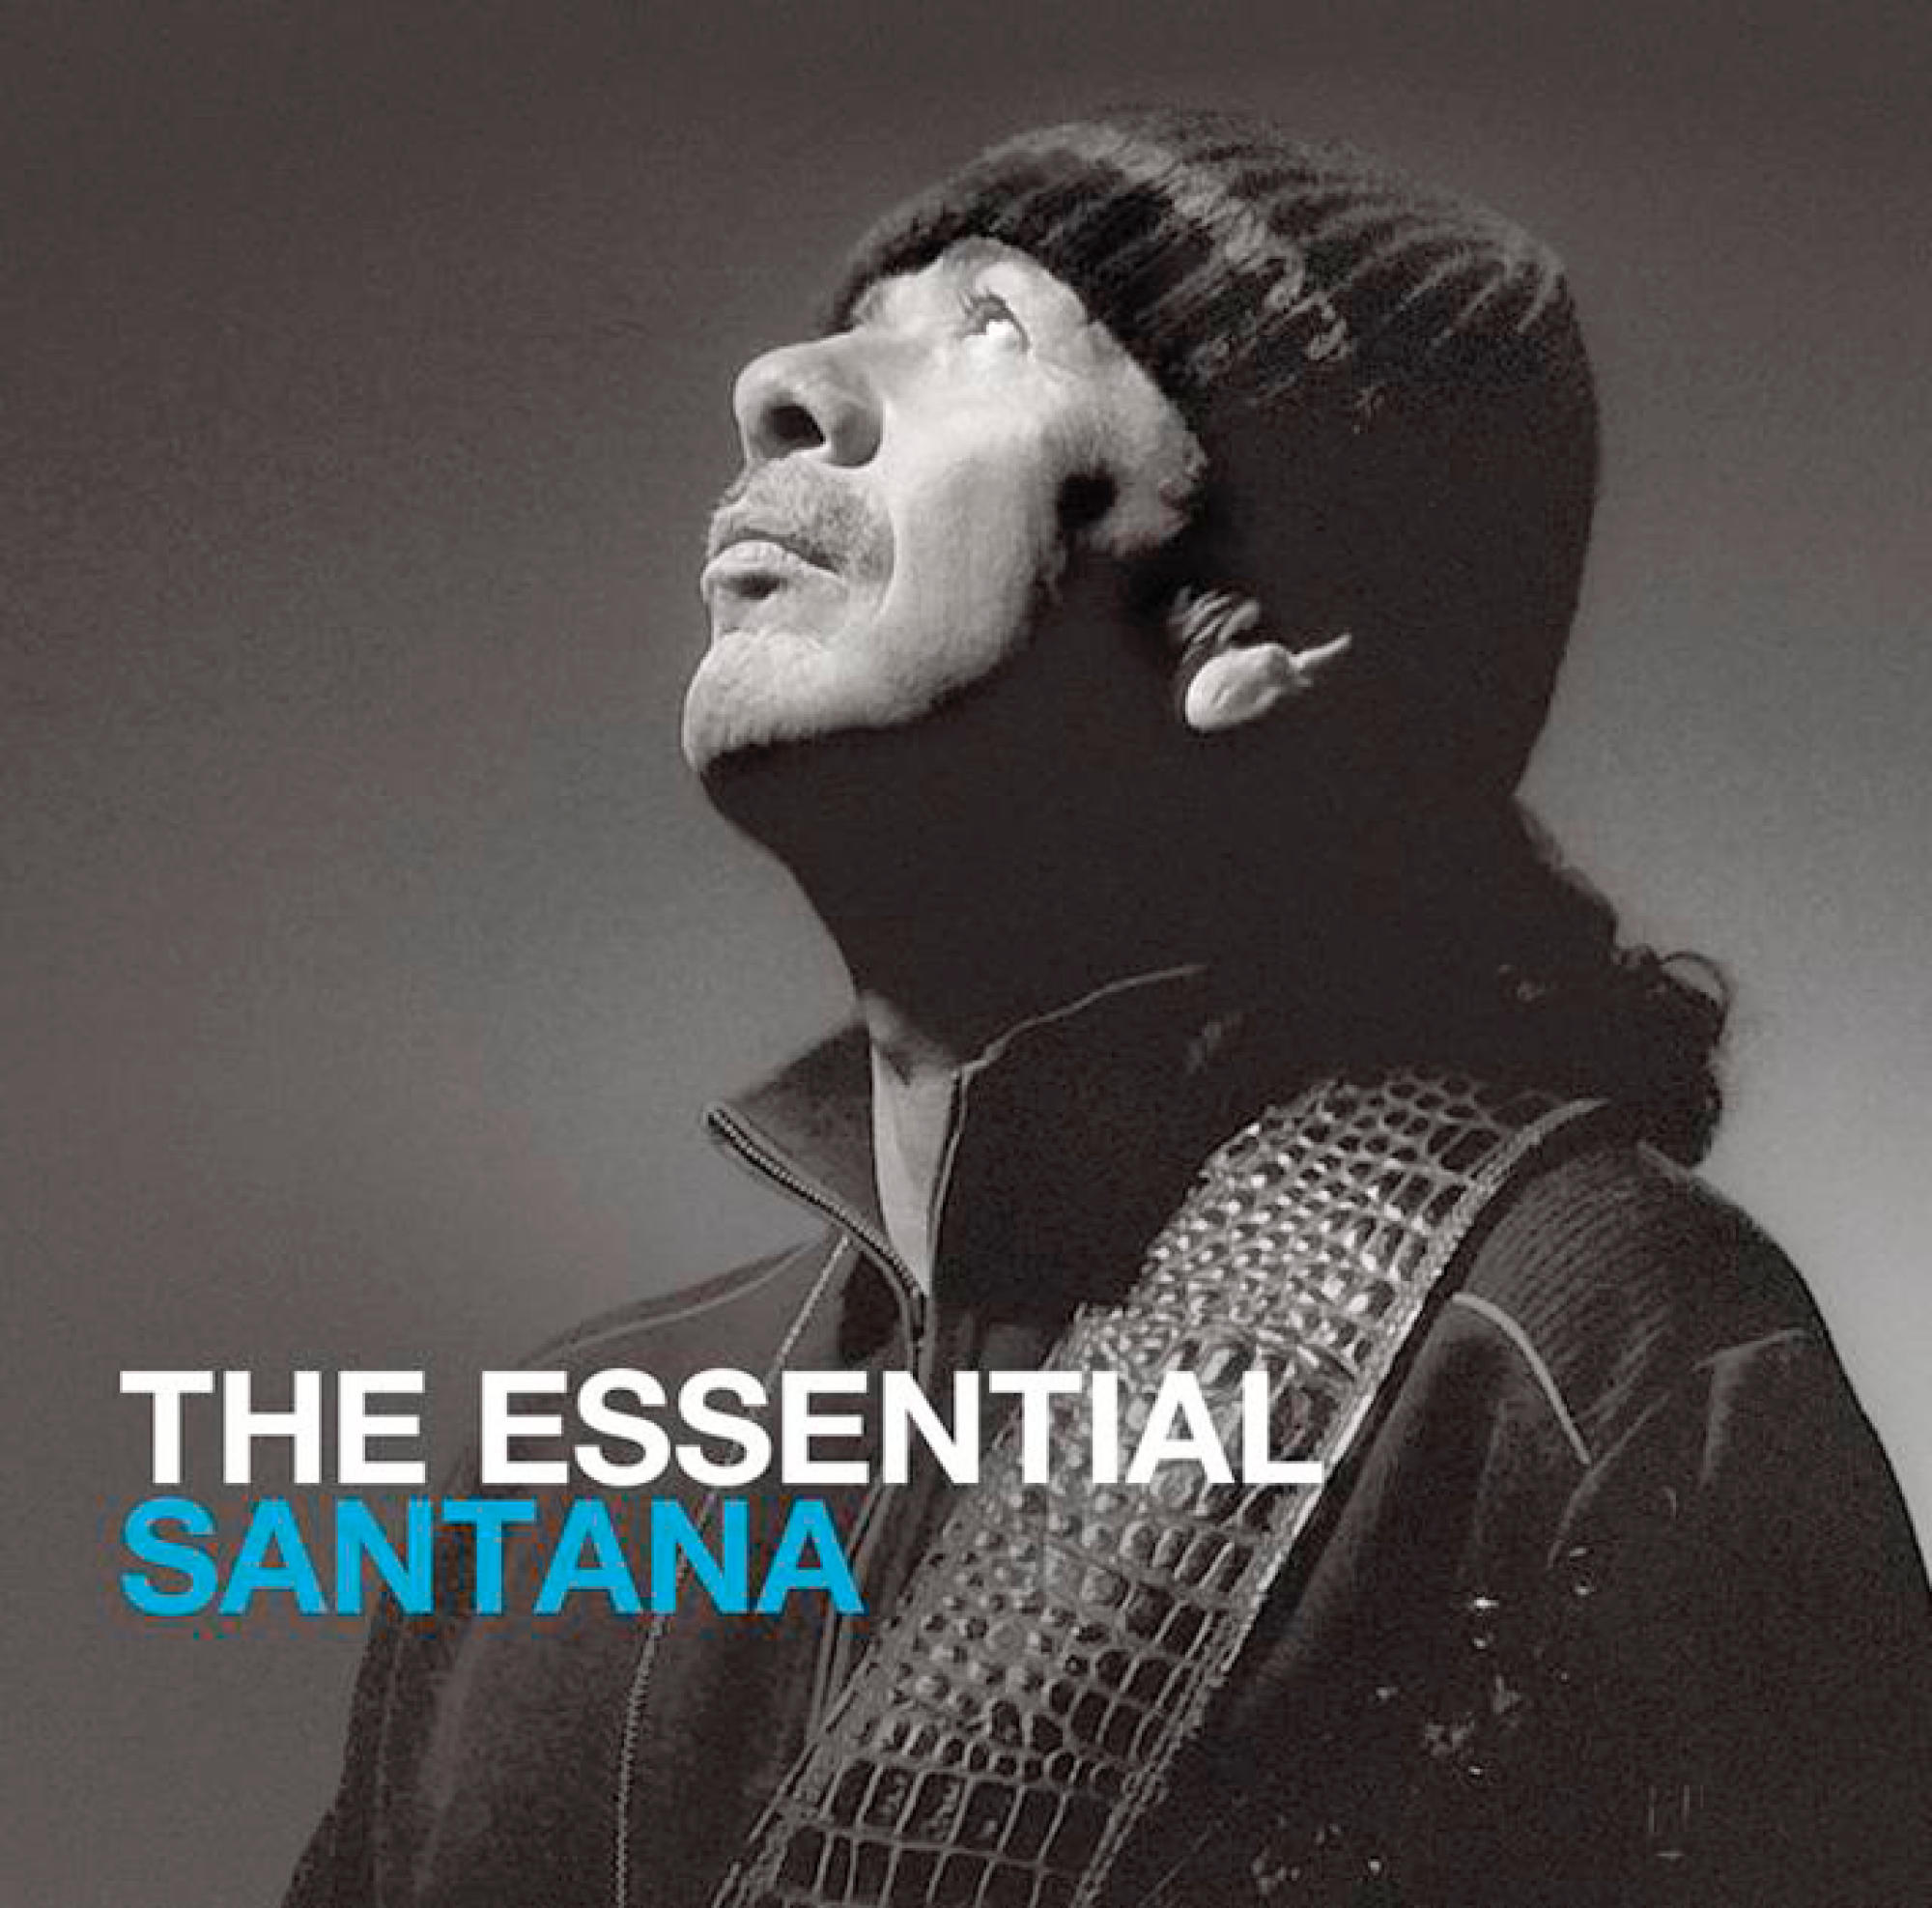 Carlos Santana, VARIOUS Essential The - (CD) - Santana